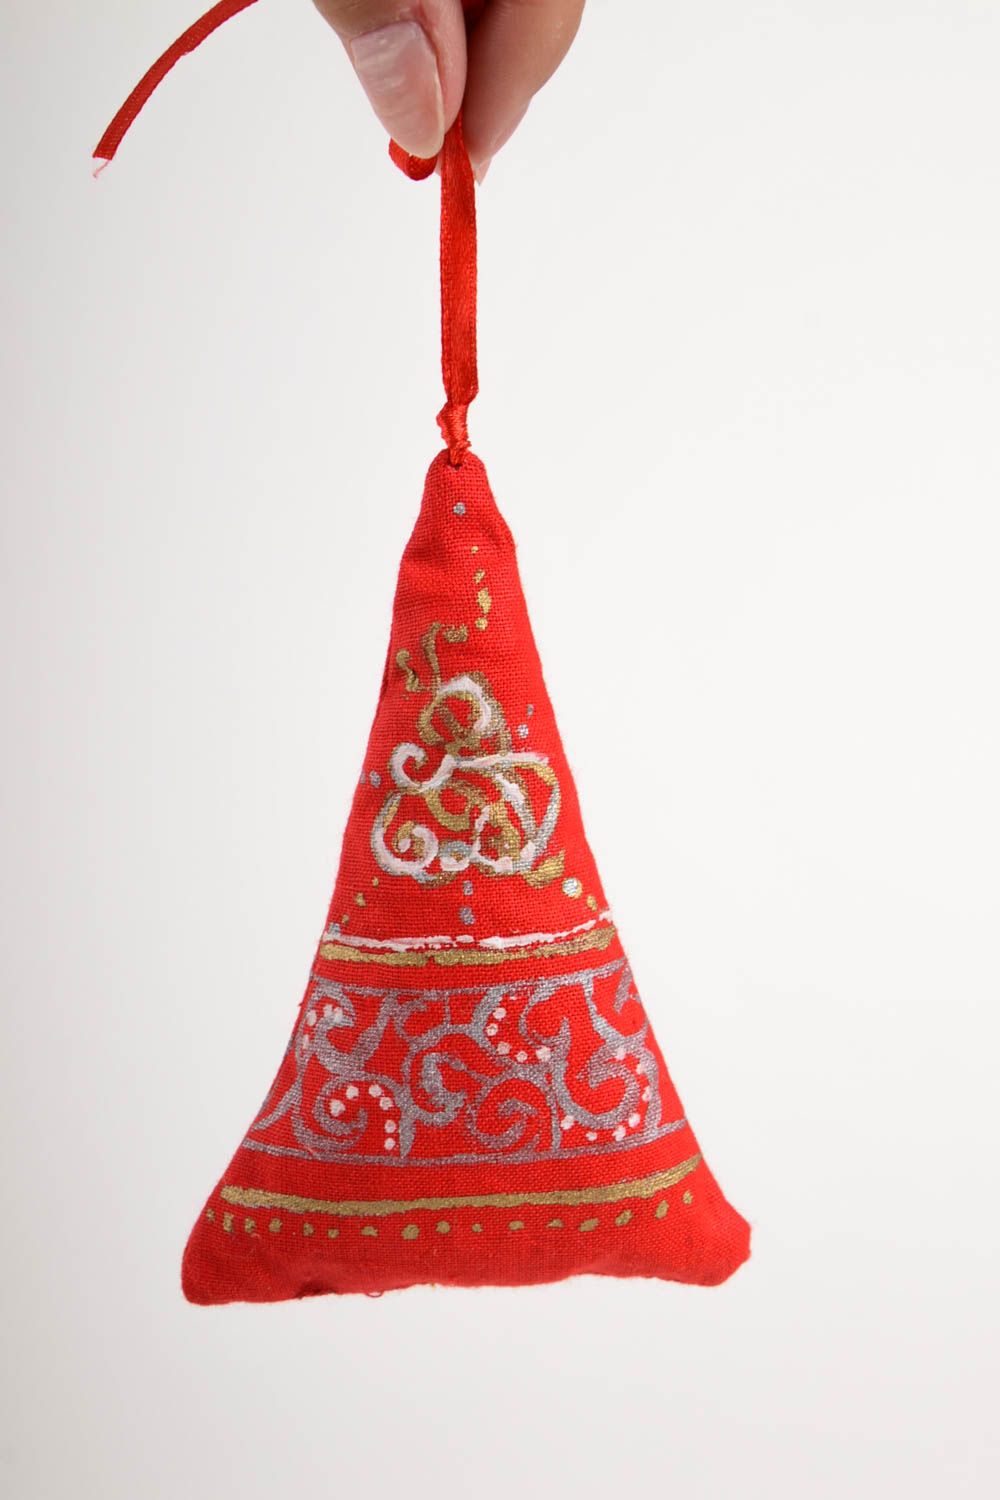 Handmade soft toy Christmas tree decor souvenir ideas for decorative use only photo 3